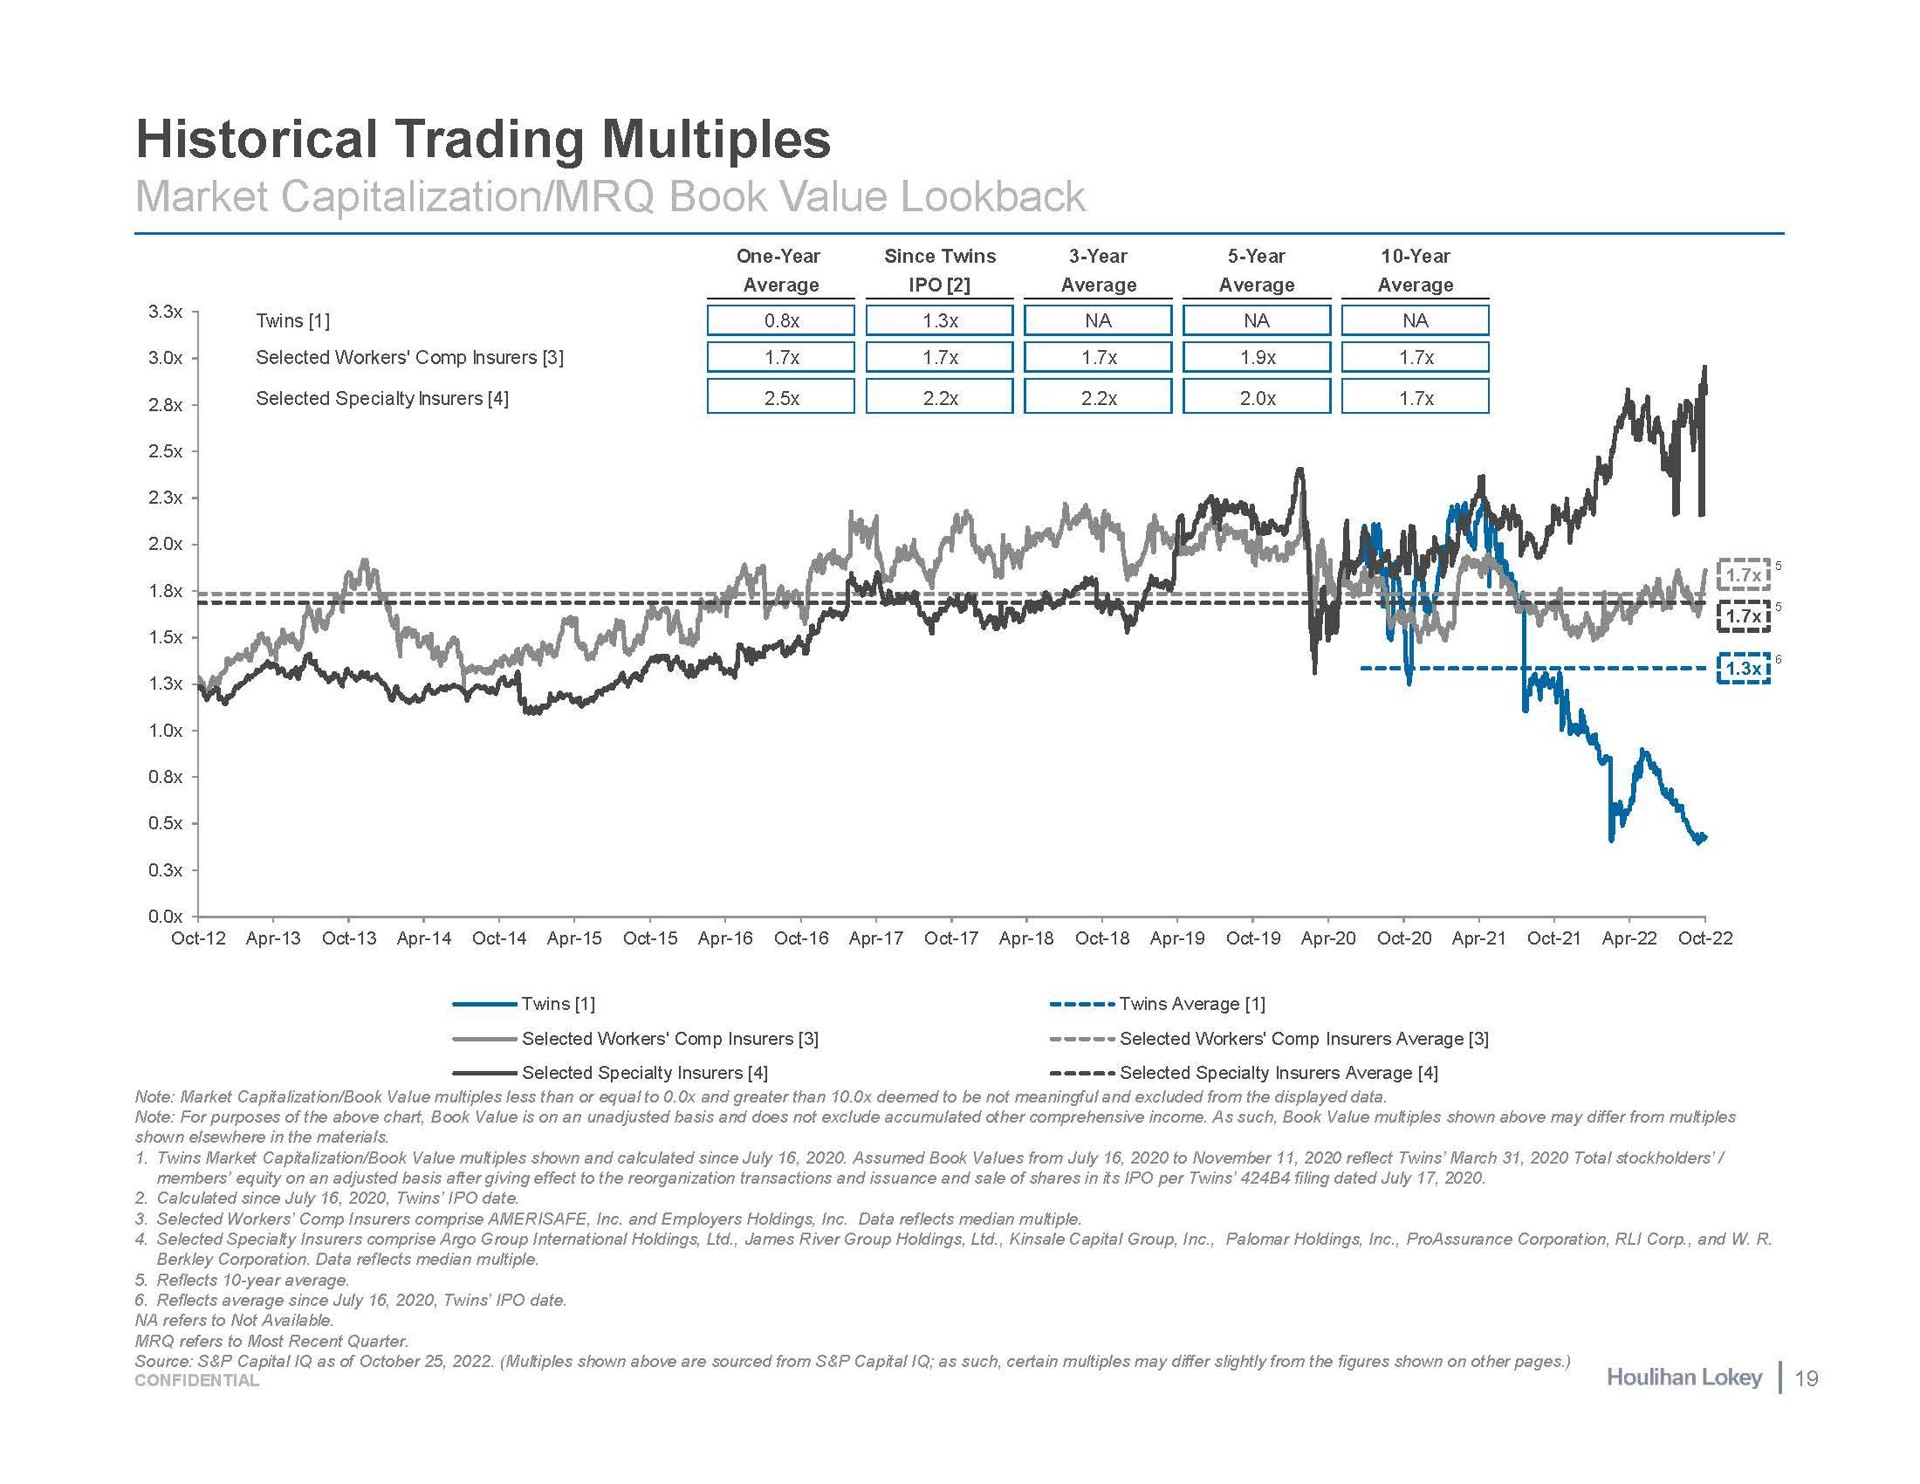 historical trading multiples market capitalization book value twins | Houlihan Lokey